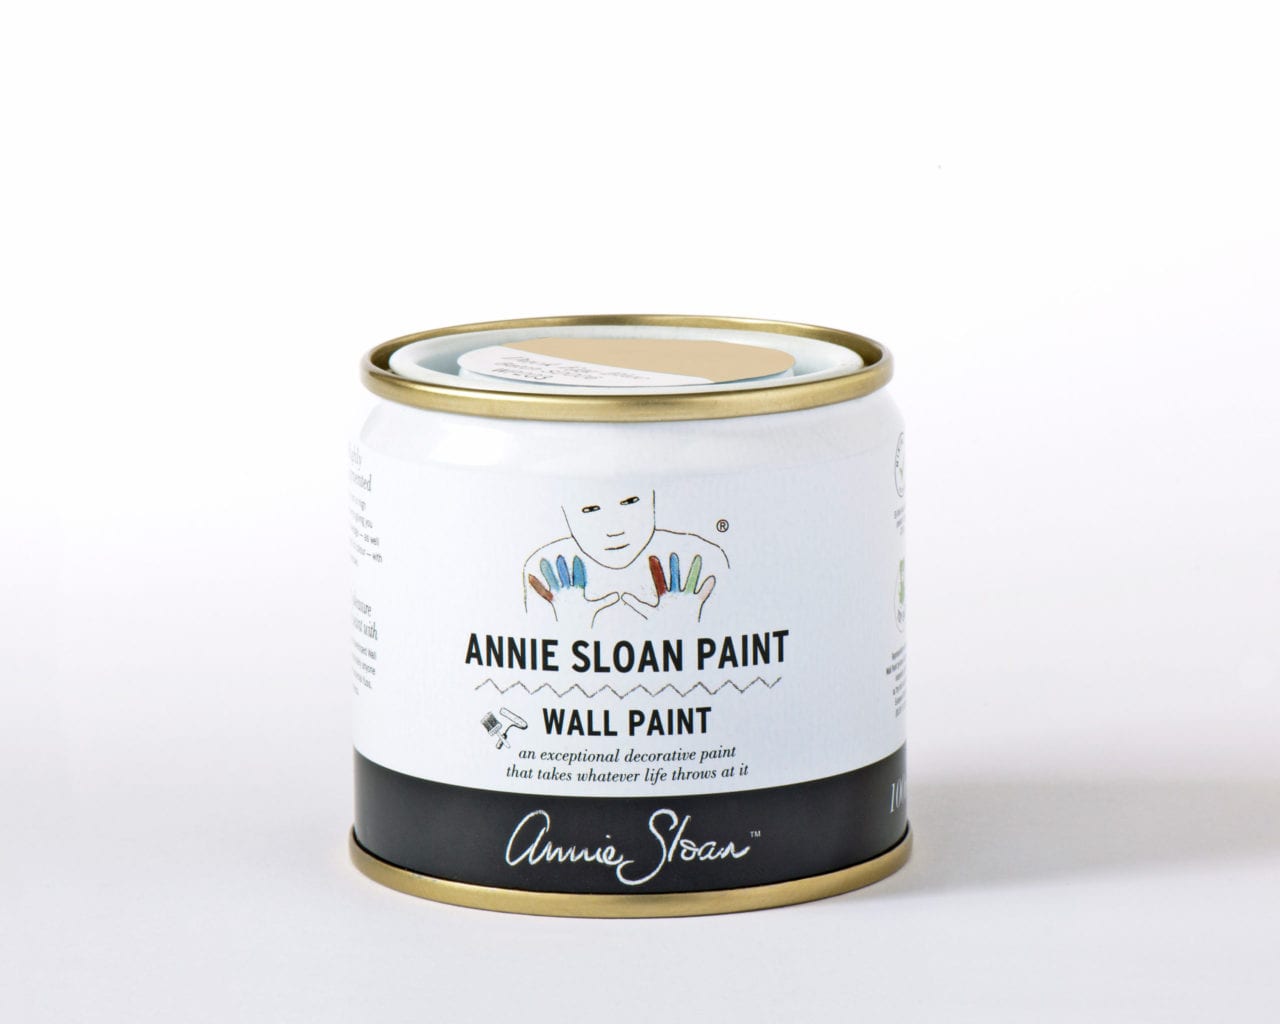 1641471432Old-Ochre-Annie-Sloan-Wall-Paint-100-ml-tin-scaled-1.jpg